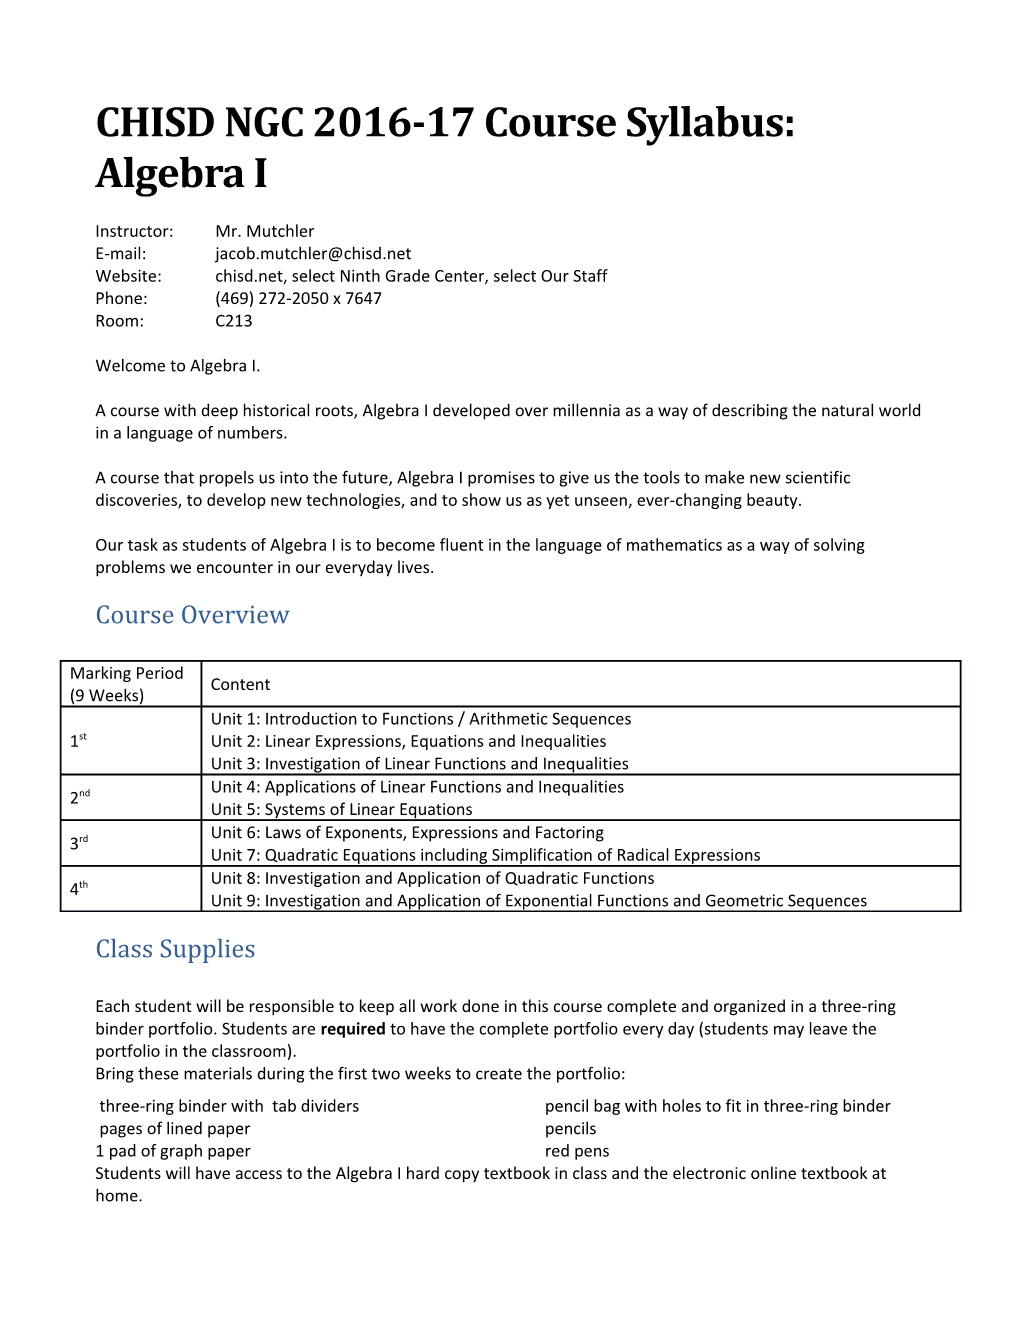 CHISD NGC 2016-17 Course Syllabus: Algebra I